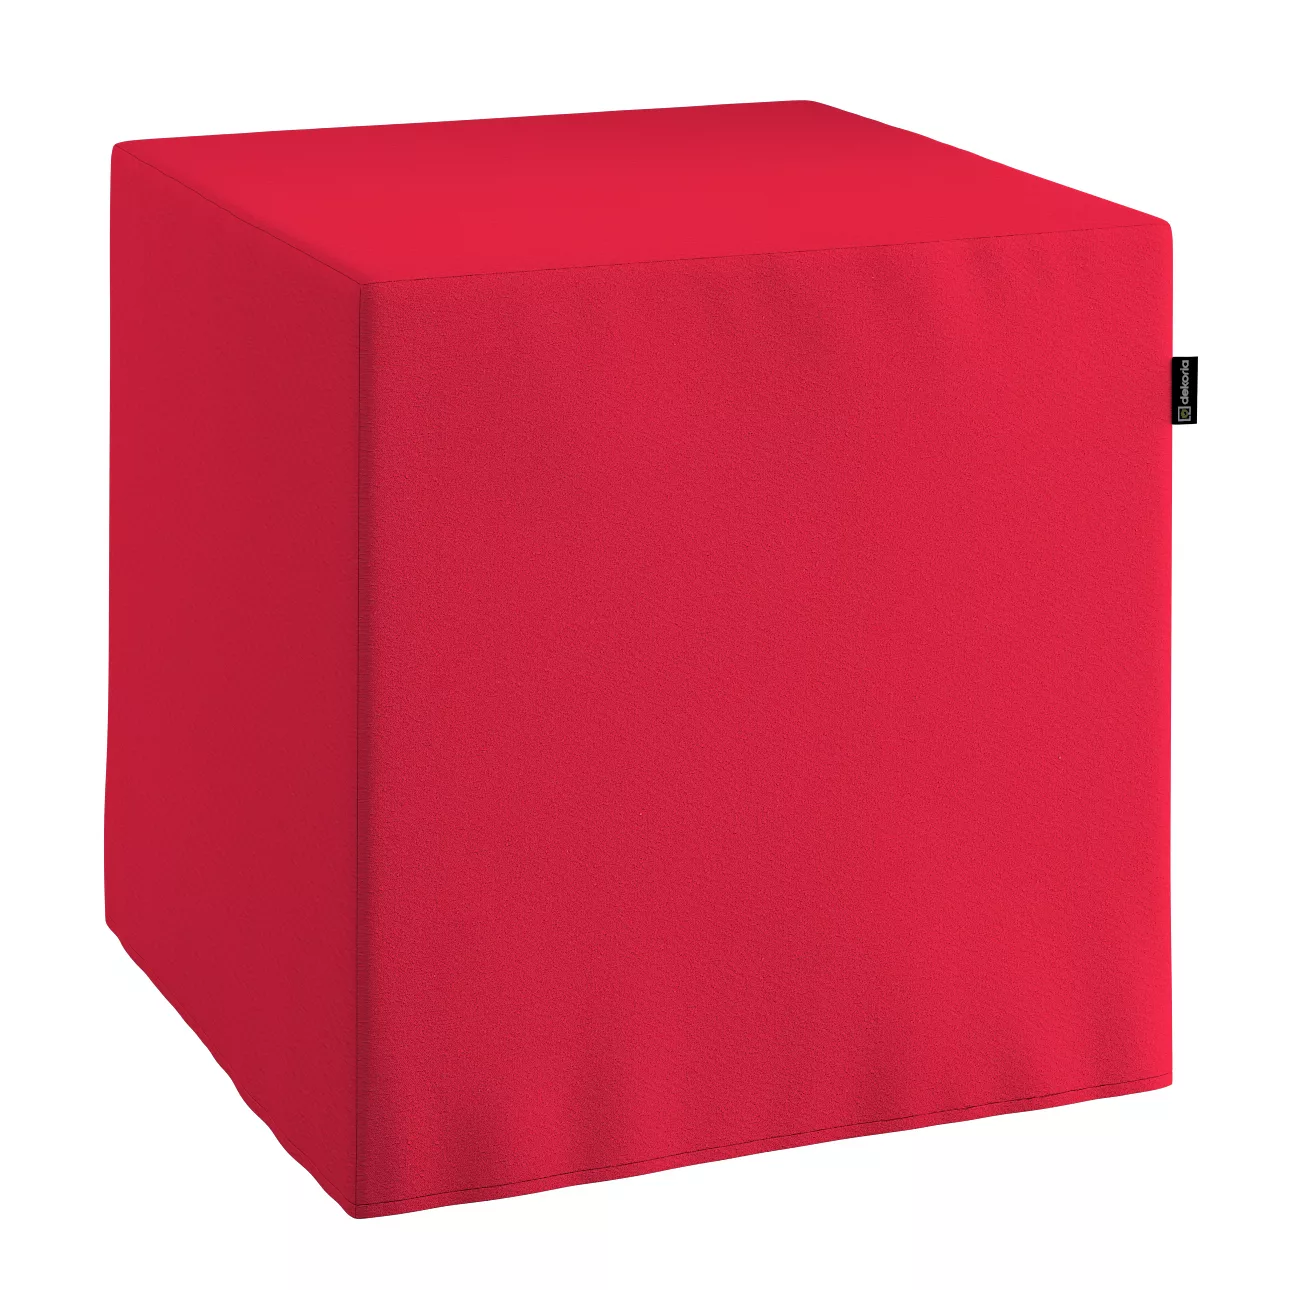 Bezug für Sitzwürfel, rot, Bezug für Sitzwürfel 40 x 40 x 40 cm, Quadro (13 günstig online kaufen